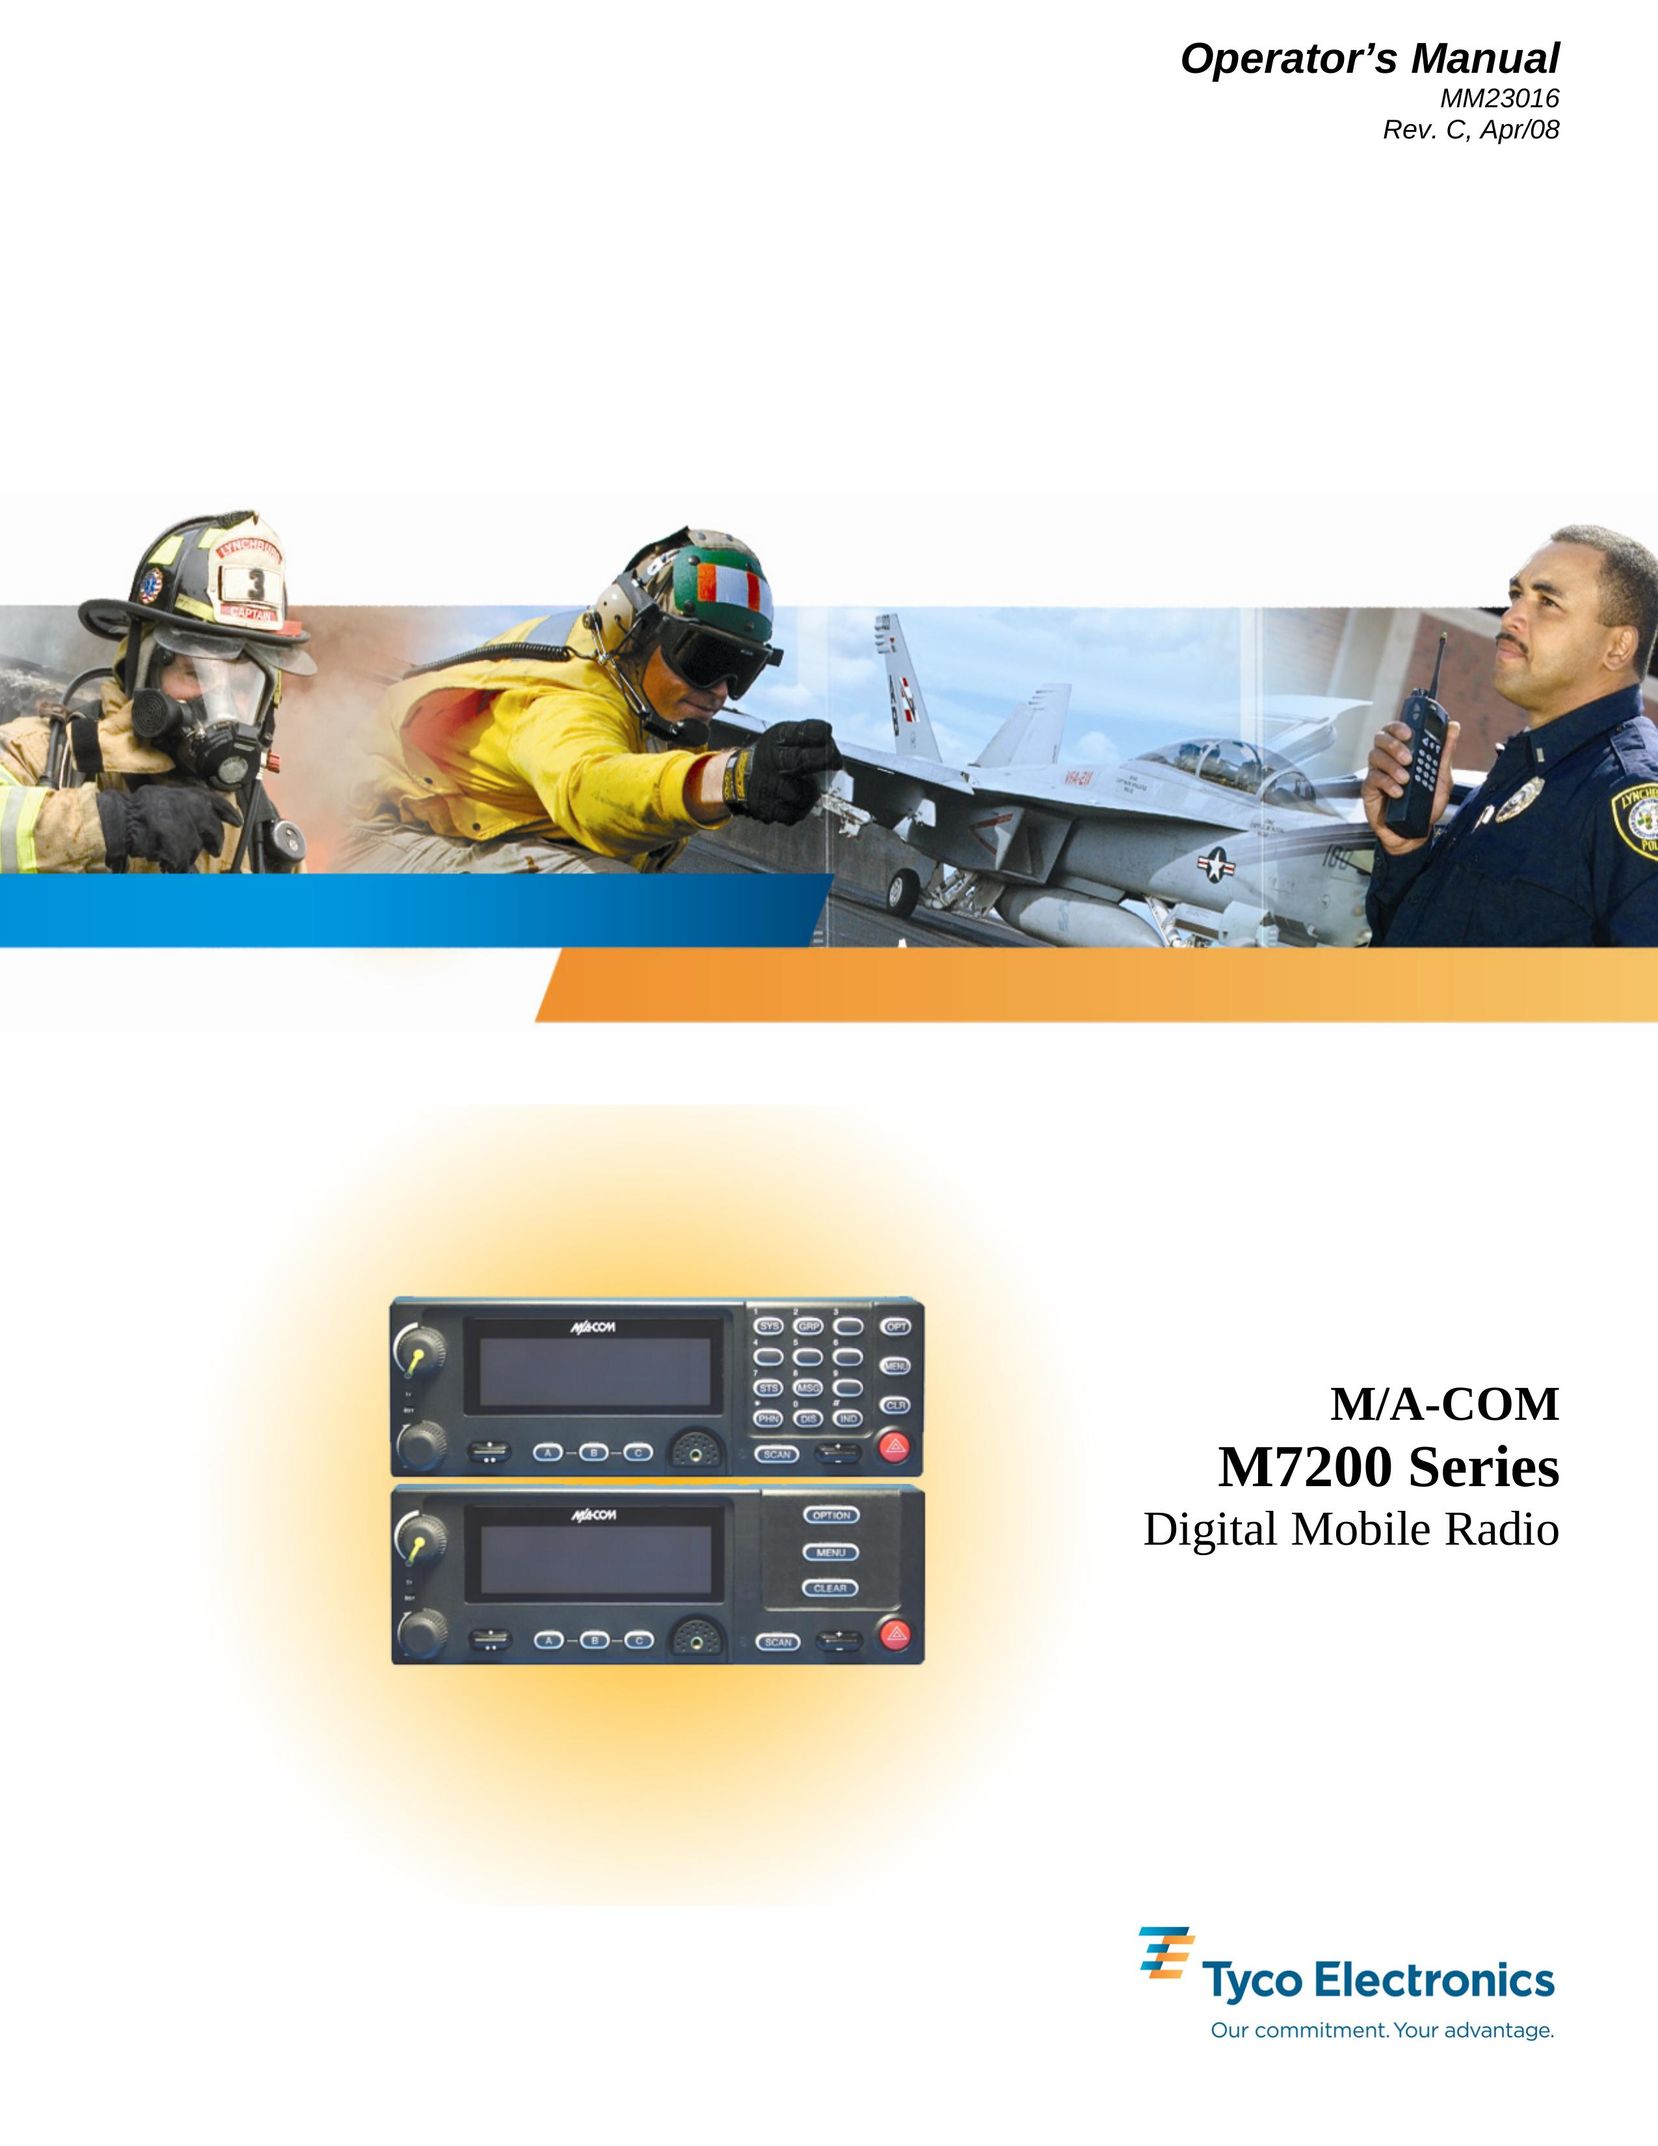 Tyco Electronics MM23016 Radio User Manual